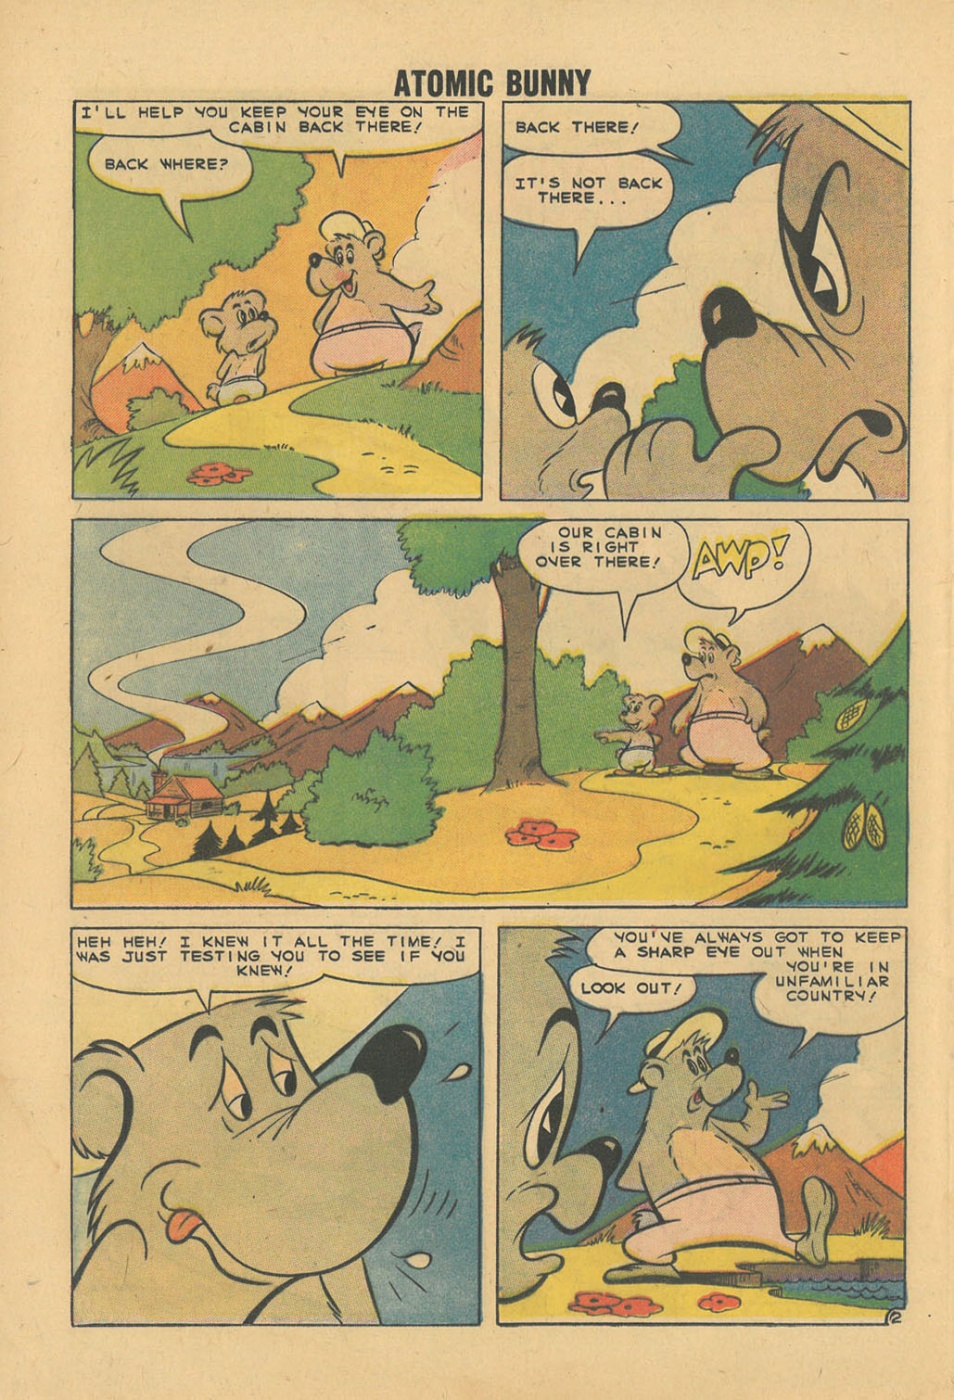 Atomic-Bunny-Comic-Strips (c) (23)